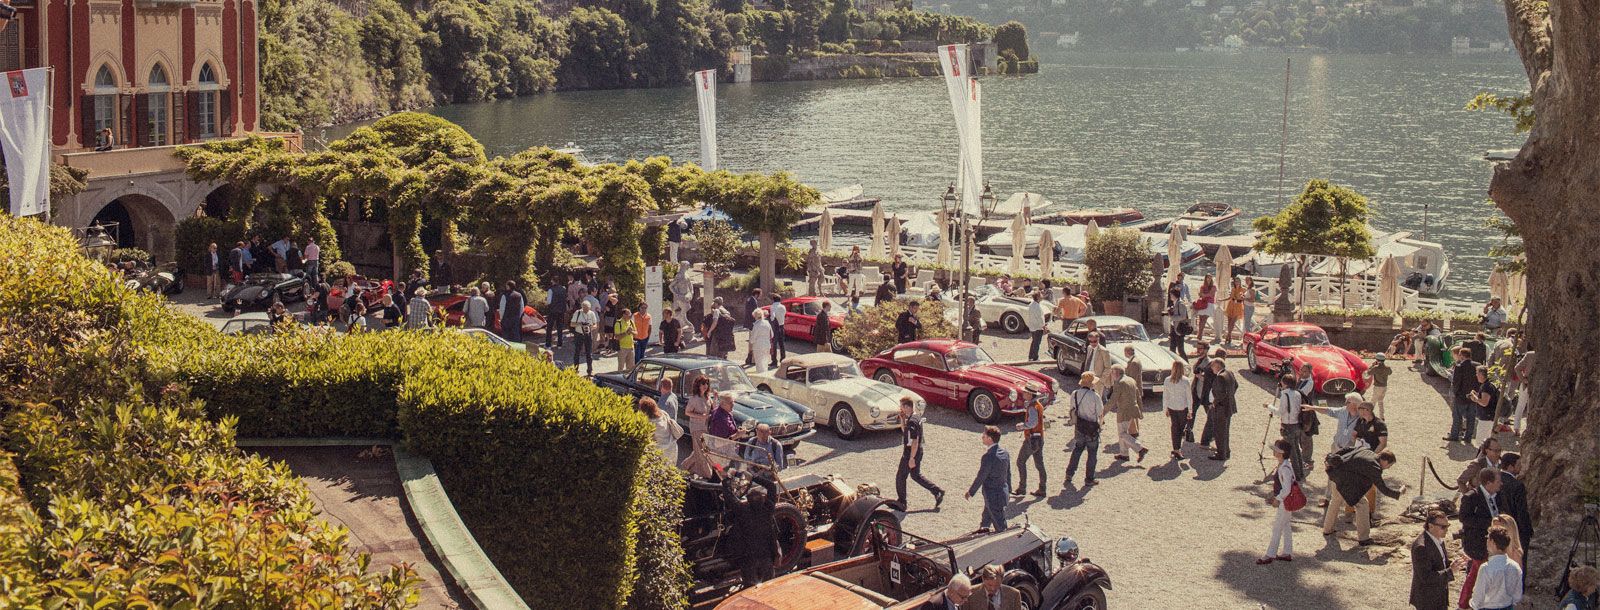 The Concorso d'Eleganza in Villa D'este, Lake Como